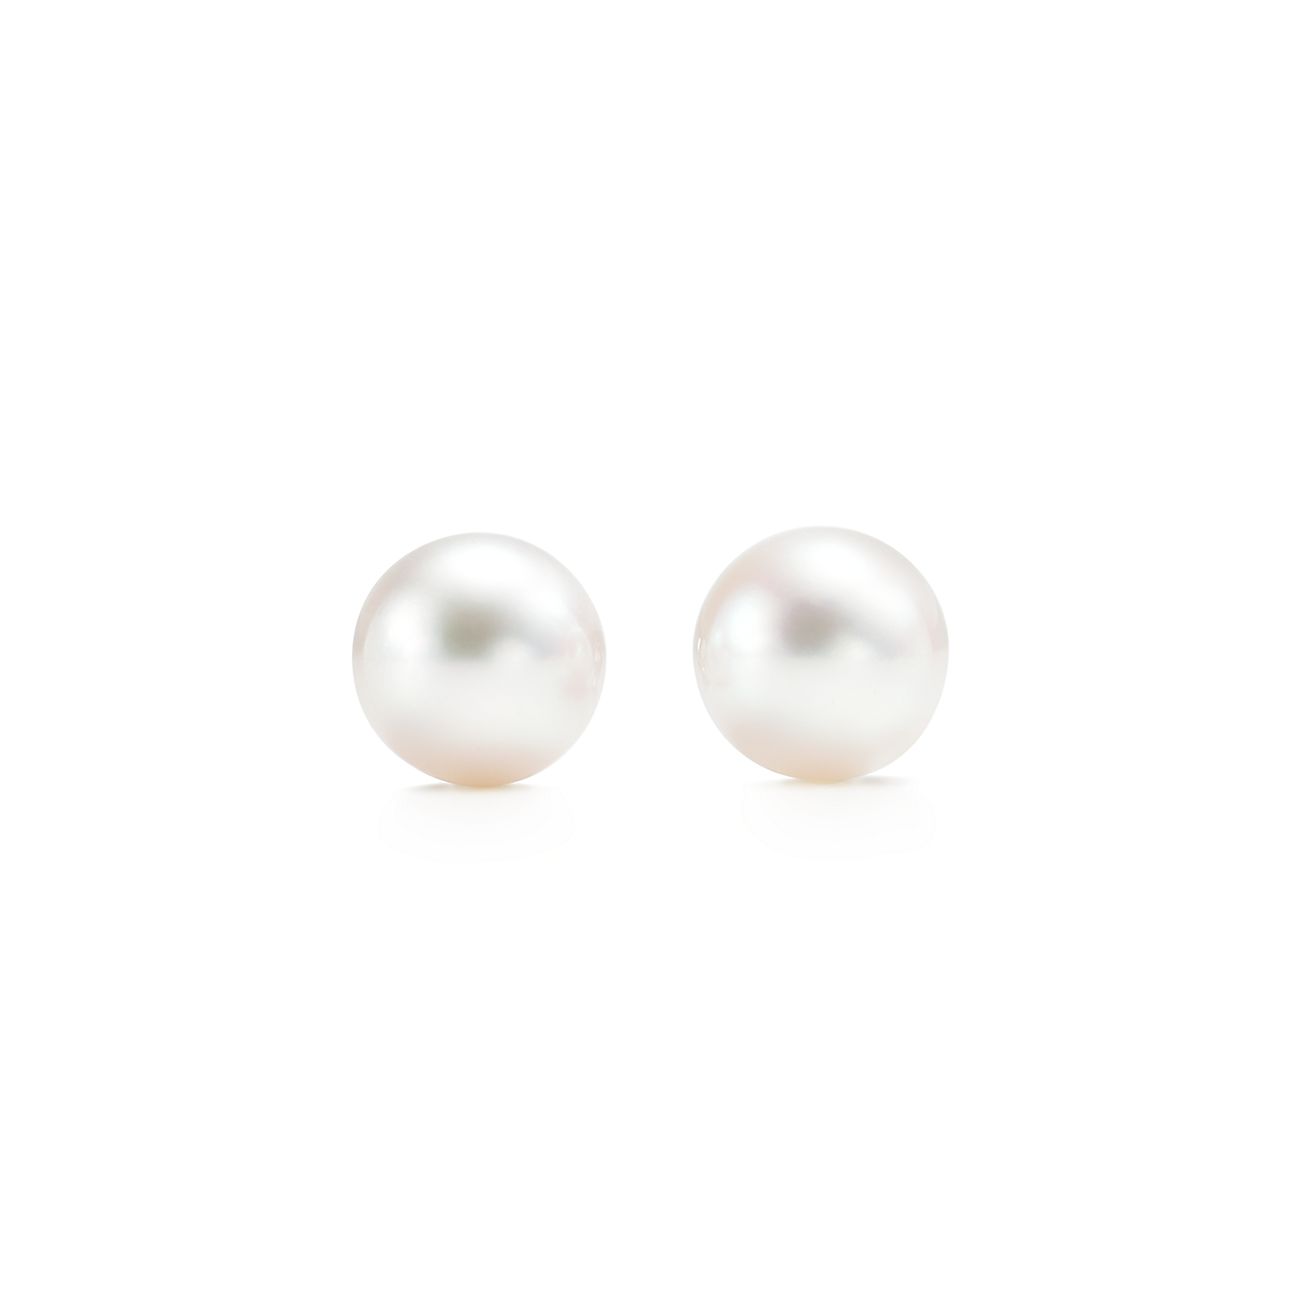 Tiffany Signature® Pearls earrings of 